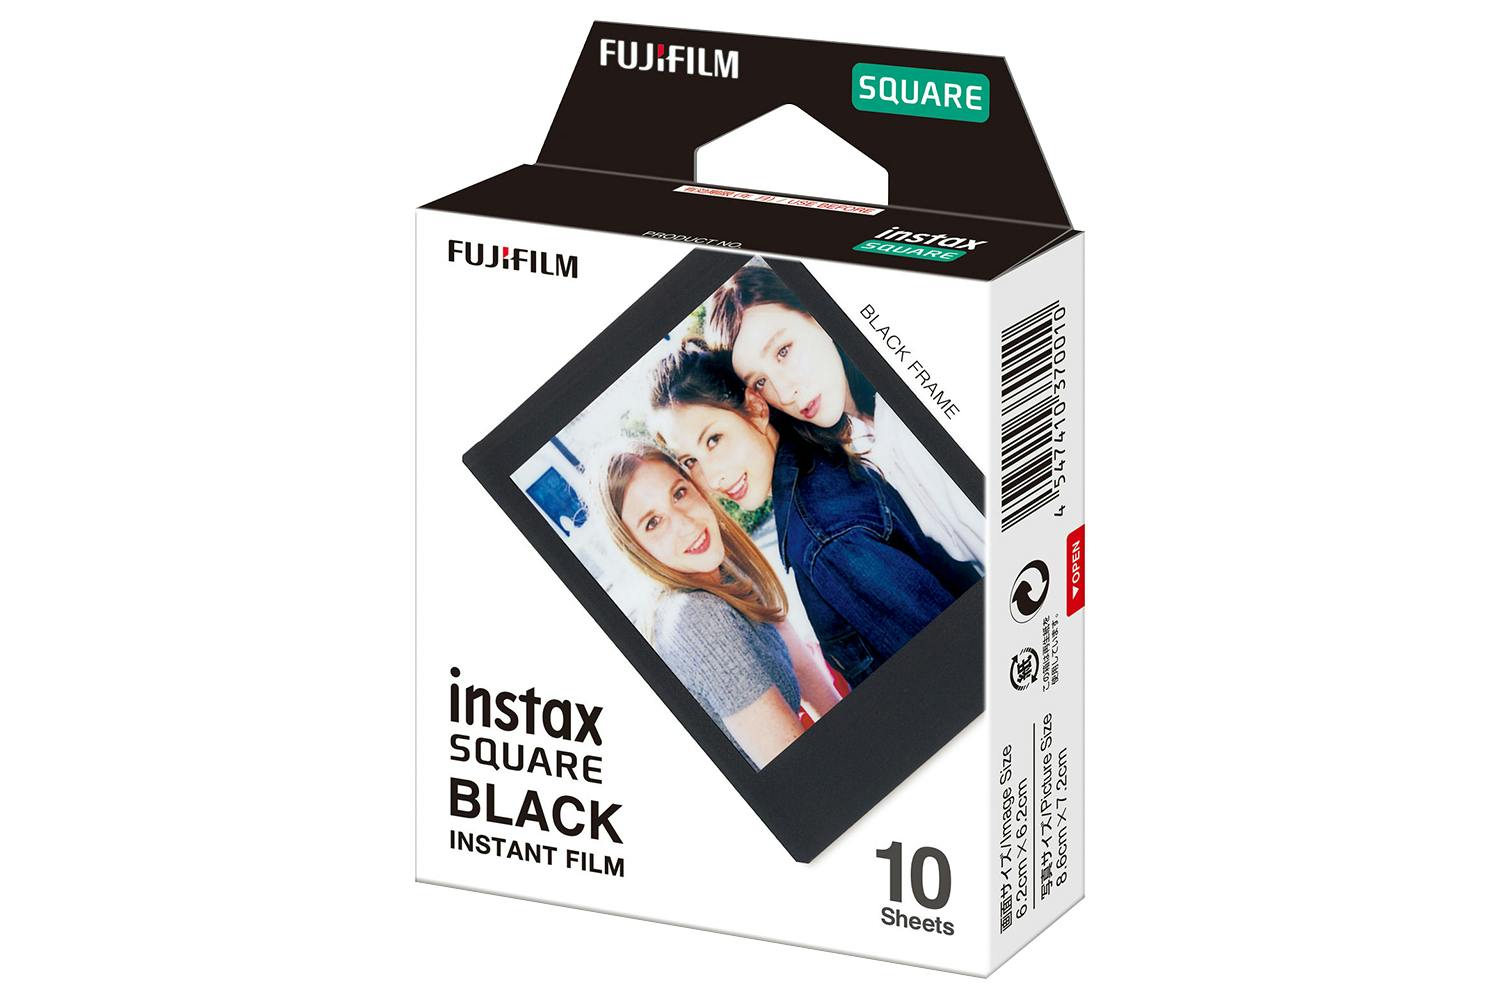 Fujifilm Instax Square Black Instant Film | 10 Sheets